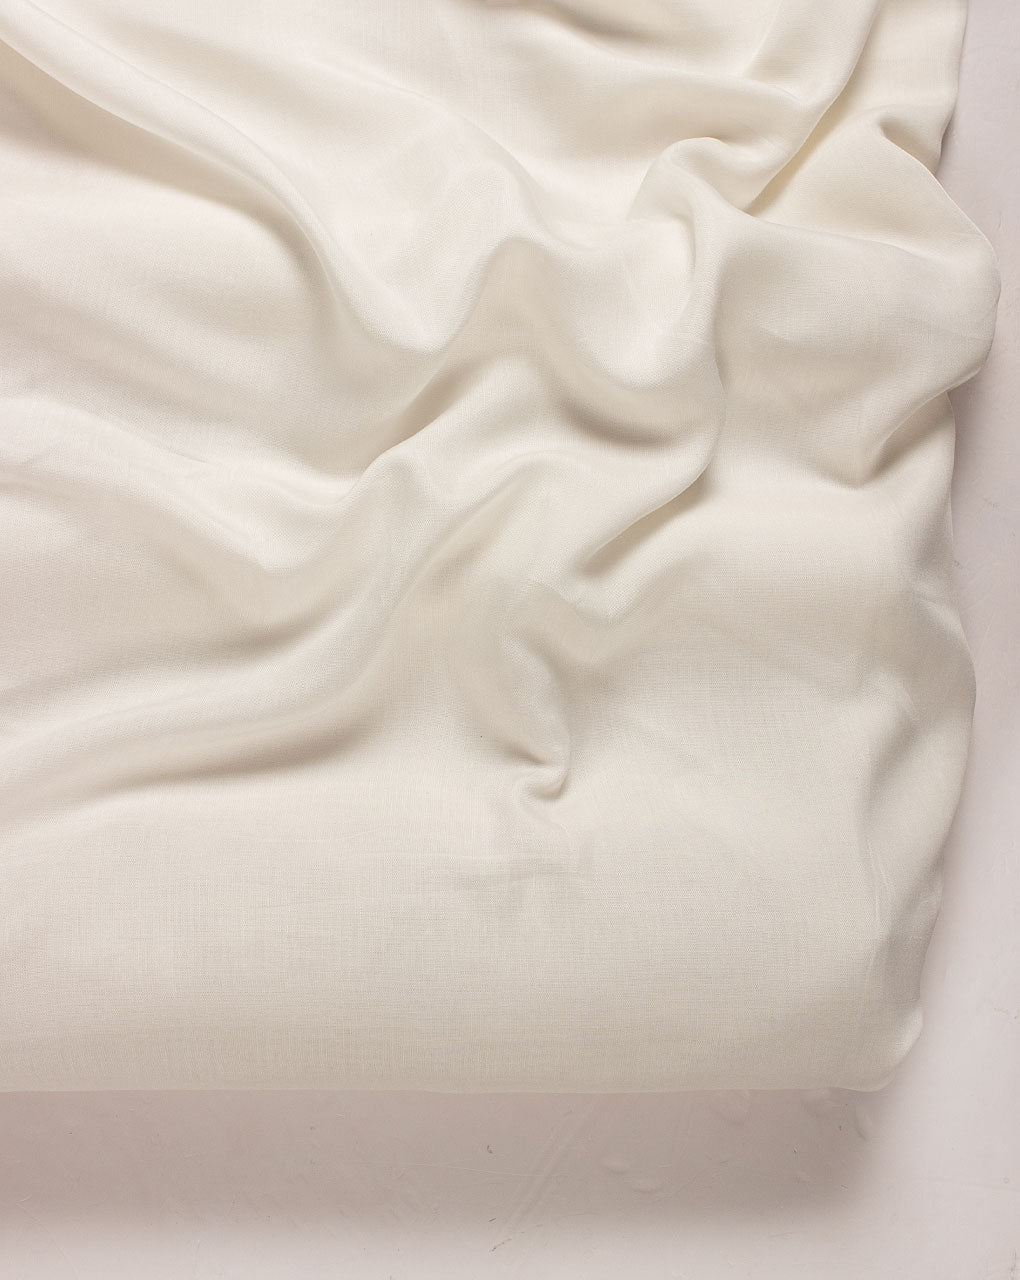 Dyeable Liva VFY Modal ( Muslin Japan Silk ) Fabric - Fabriclore.com